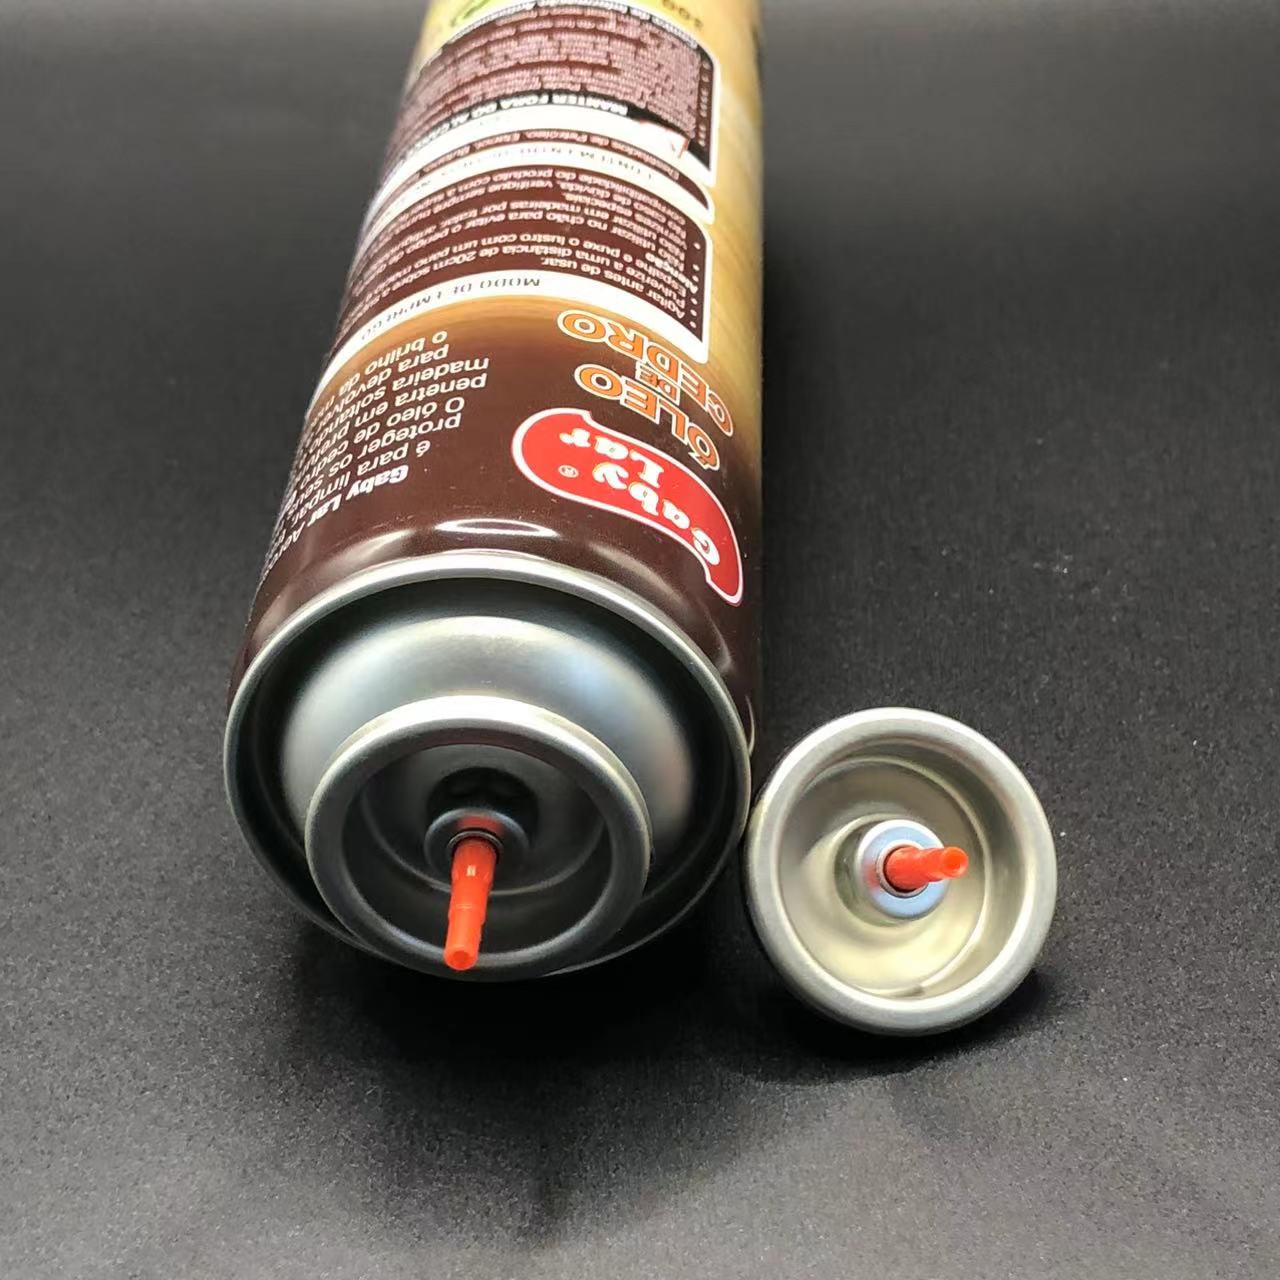 Premium Gas Lighter Refill Valve Reliable Solution for Refilling Lighters